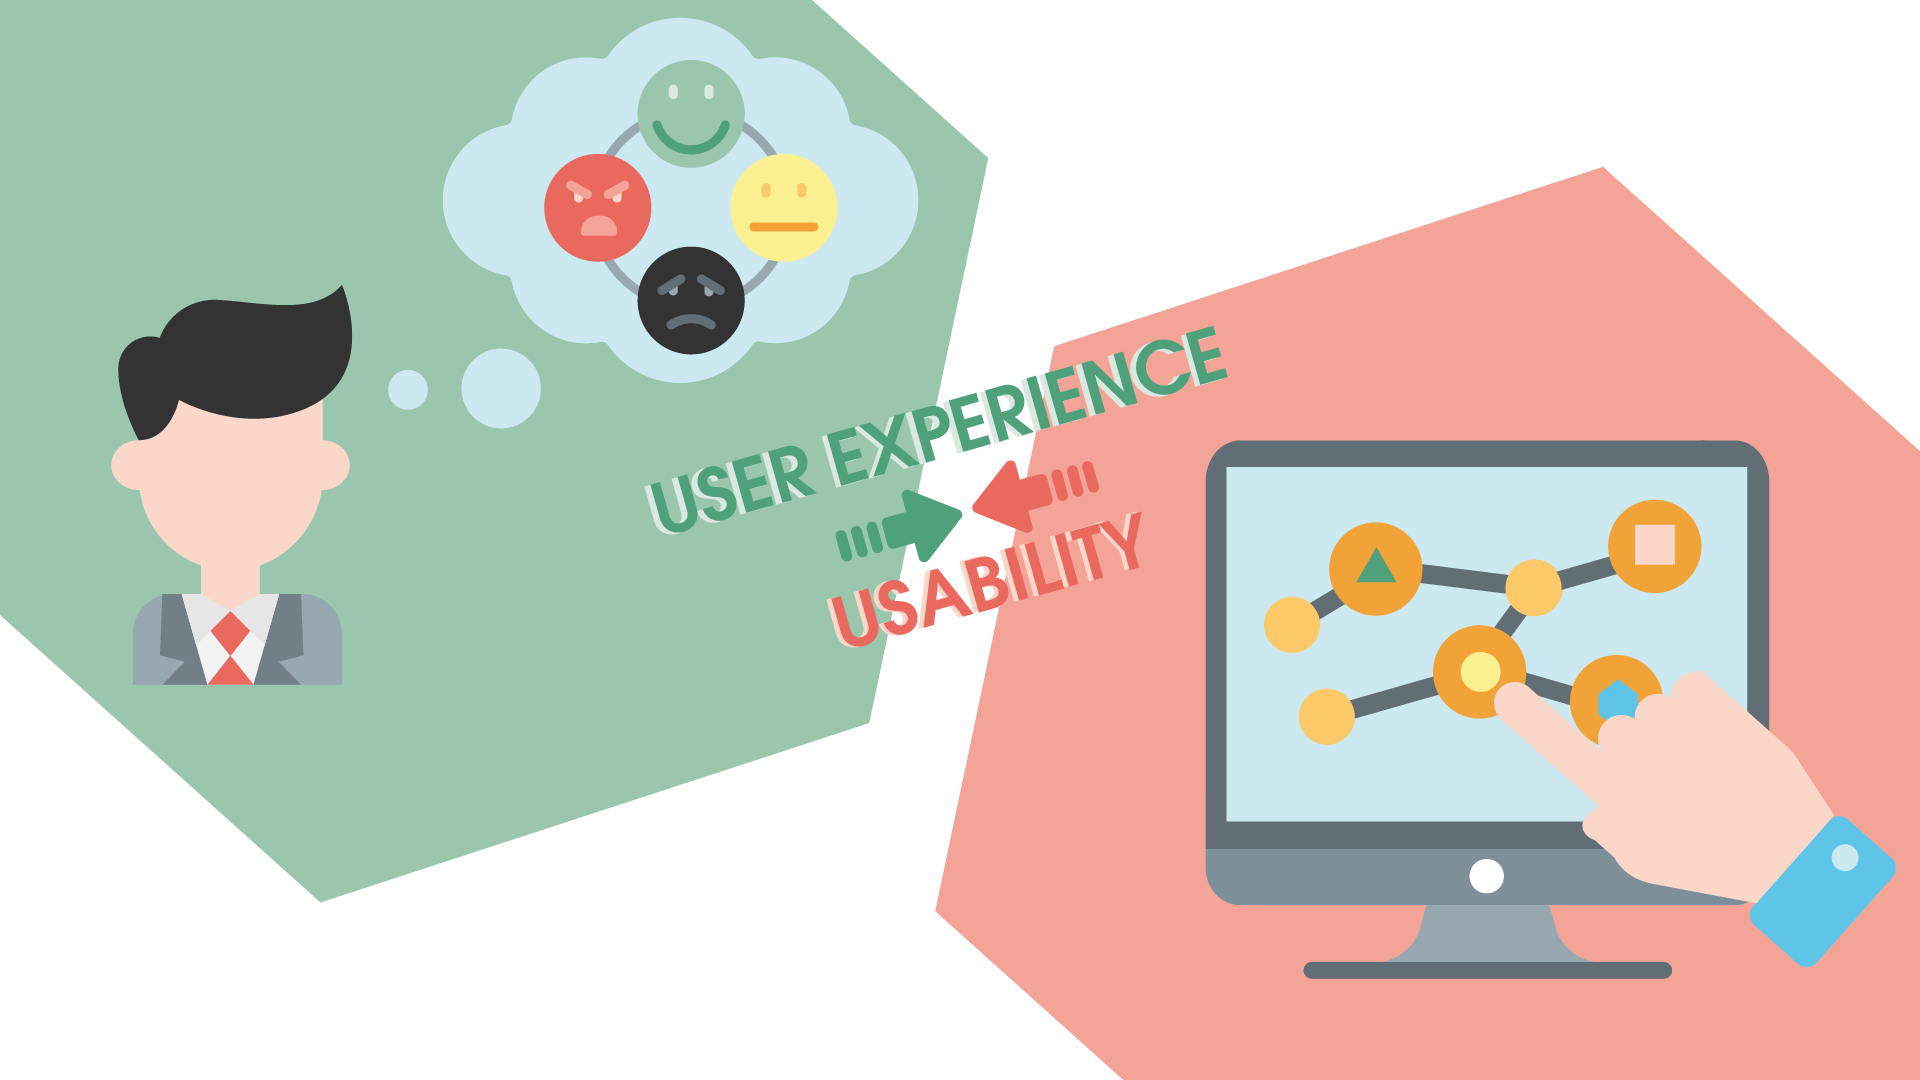 User Experience vs. Usability